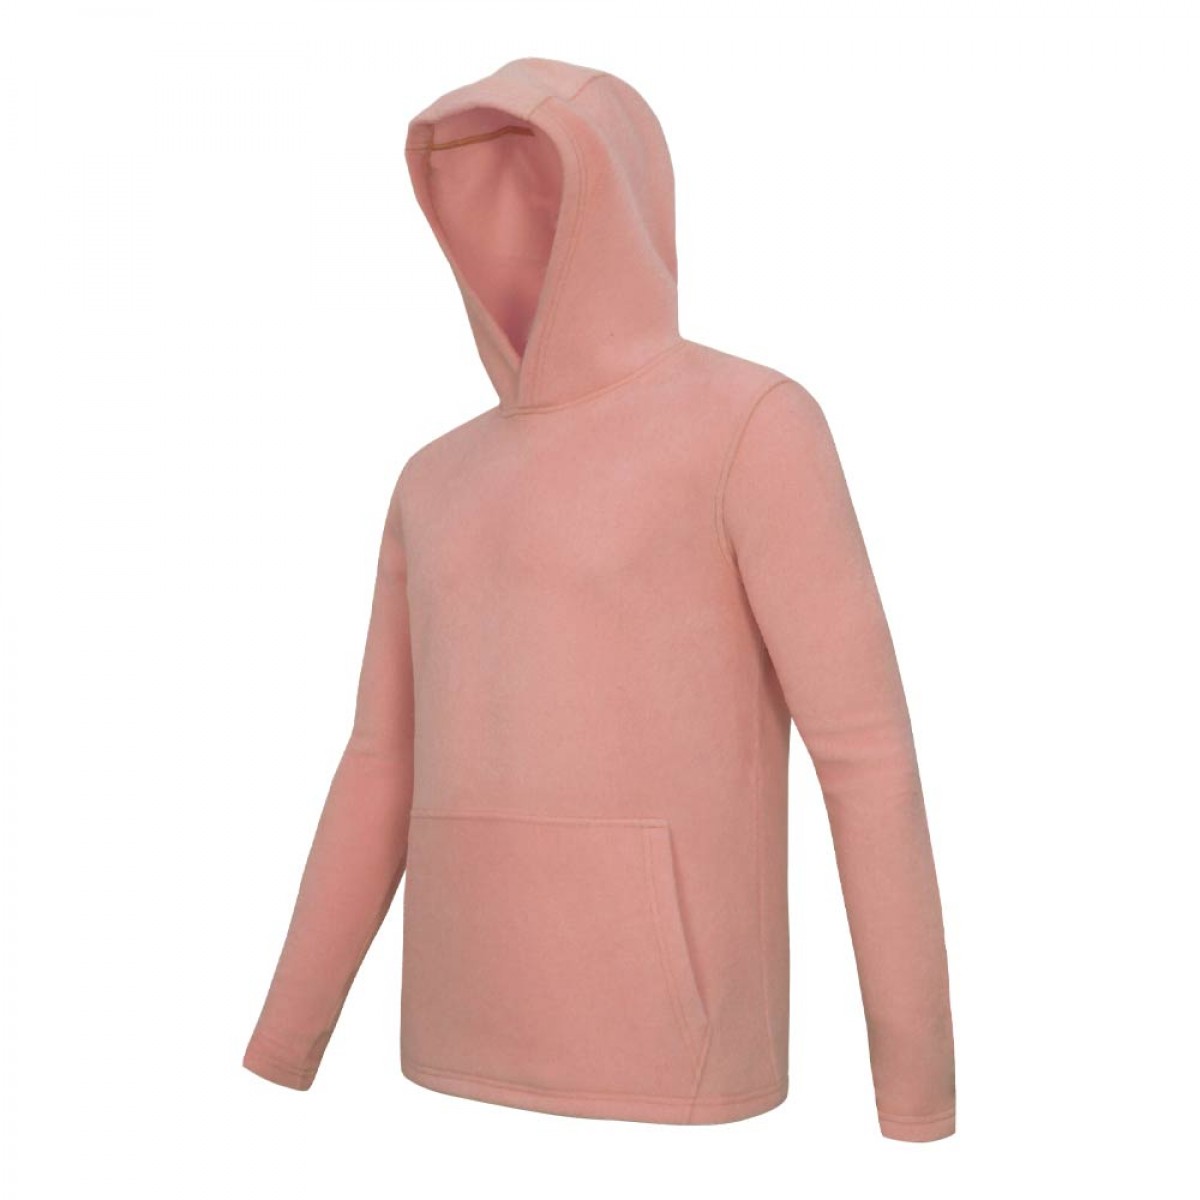 mens-fleece-hoodie-jacket-kfhj15104-2a